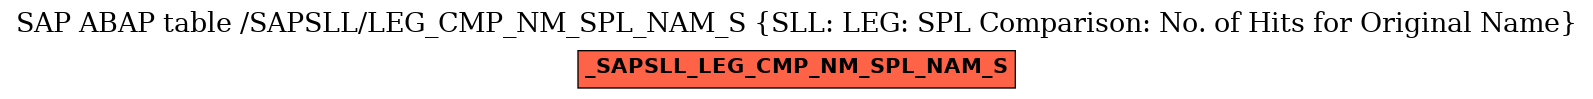 E-R Diagram for table /SAPSLL/LEG_CMP_NM_SPL_NAM_S (SLL: LEG: SPL Comparison: No. of Hits for Original Name)